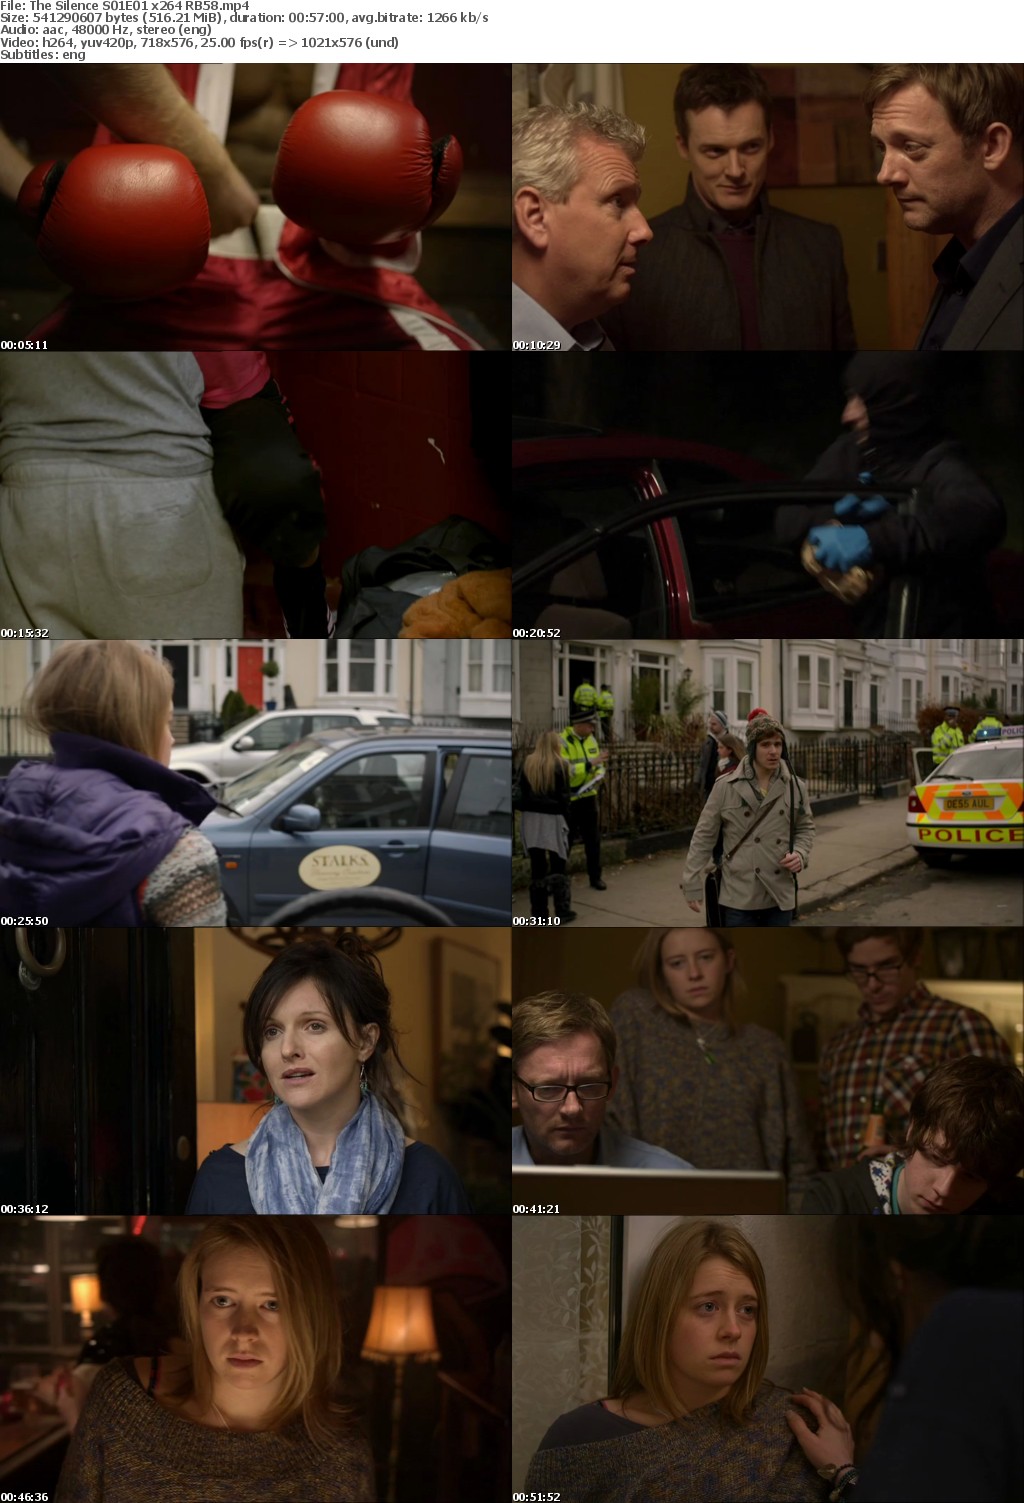 The Silence S01 (BBC Mini-series 2010) DVDrip x264 RB58